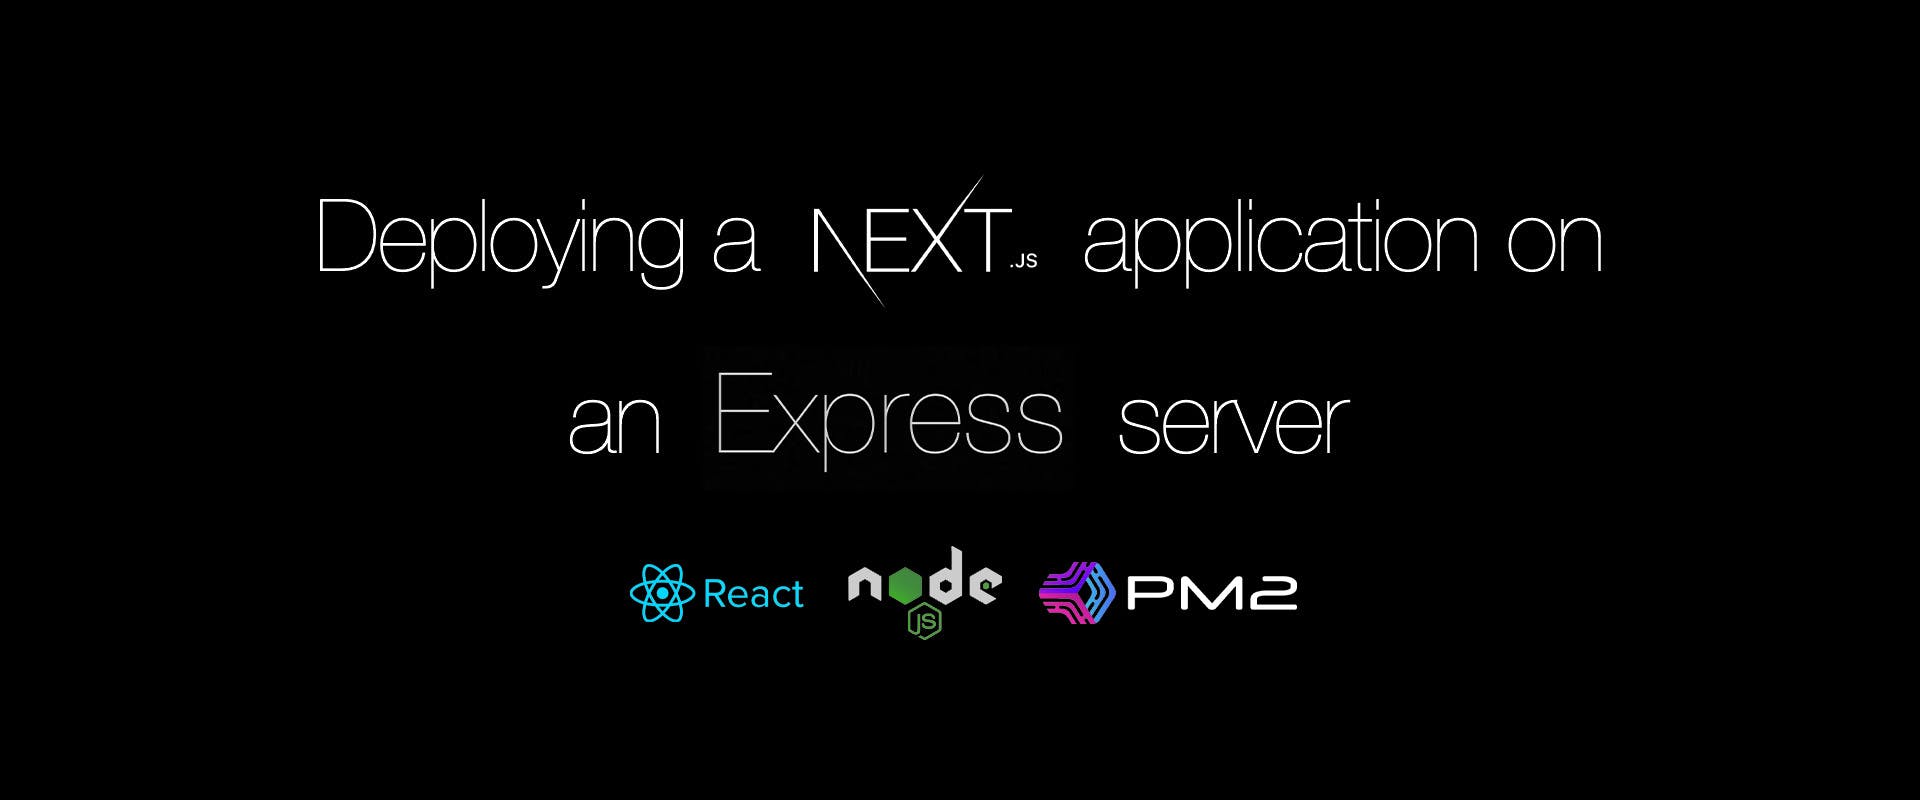 Deploying a Next.js Application on Express